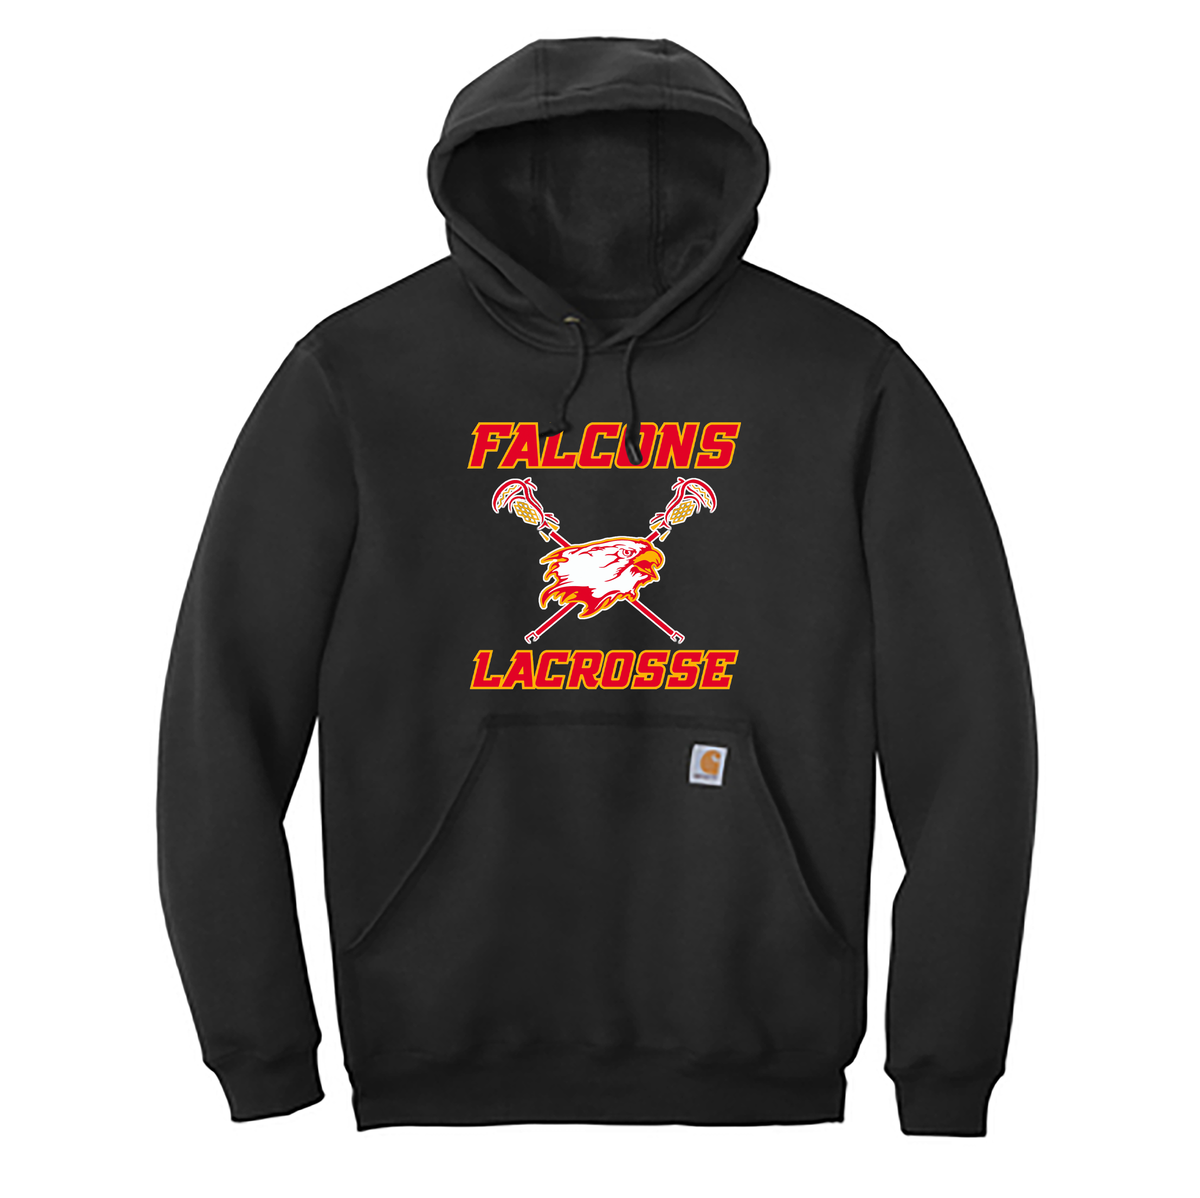 Falcons Lacrosse Club Carhartt Midweight Hooded Sweatshirt